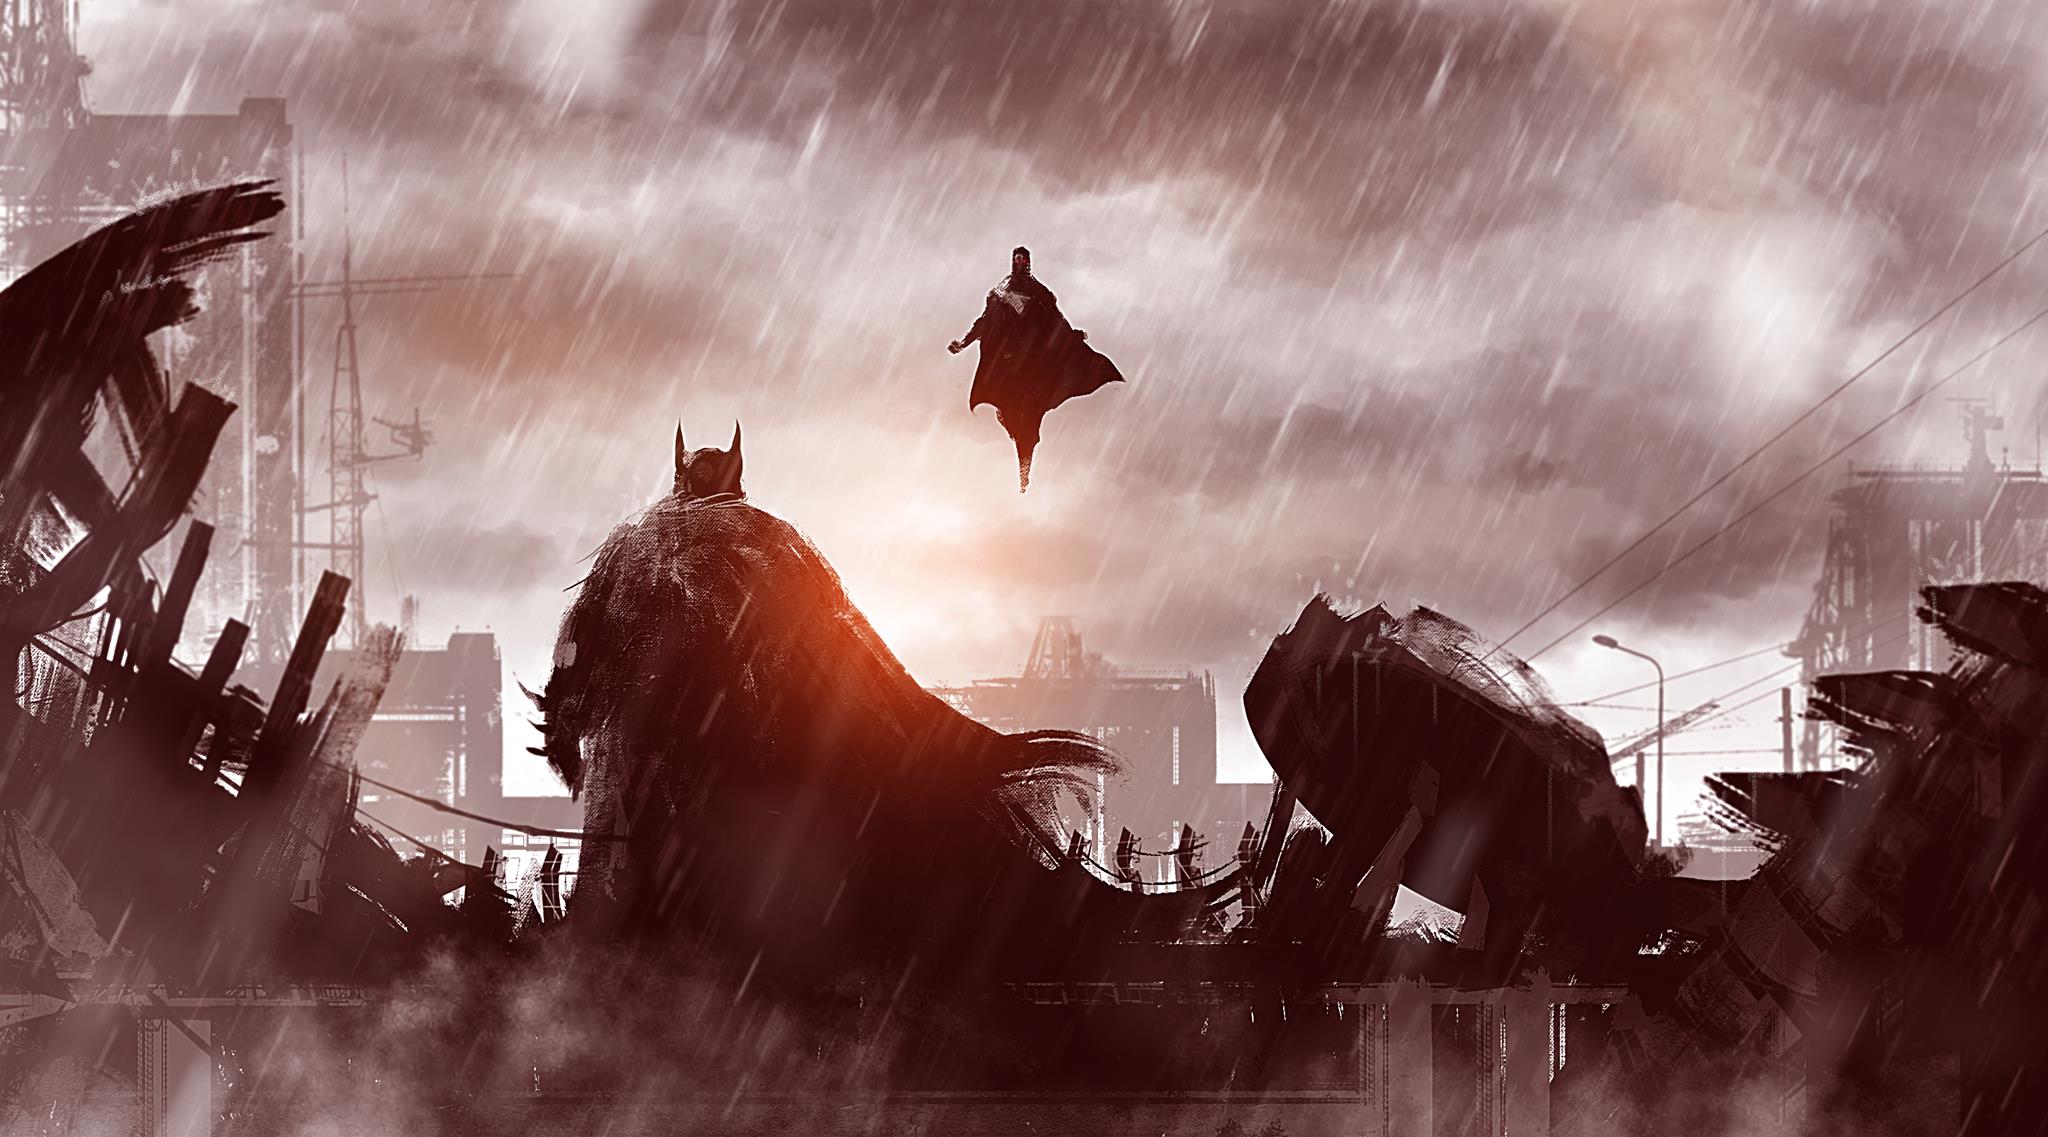 HD Wallpaper Batman Vs Superman In Many Size Ranging From